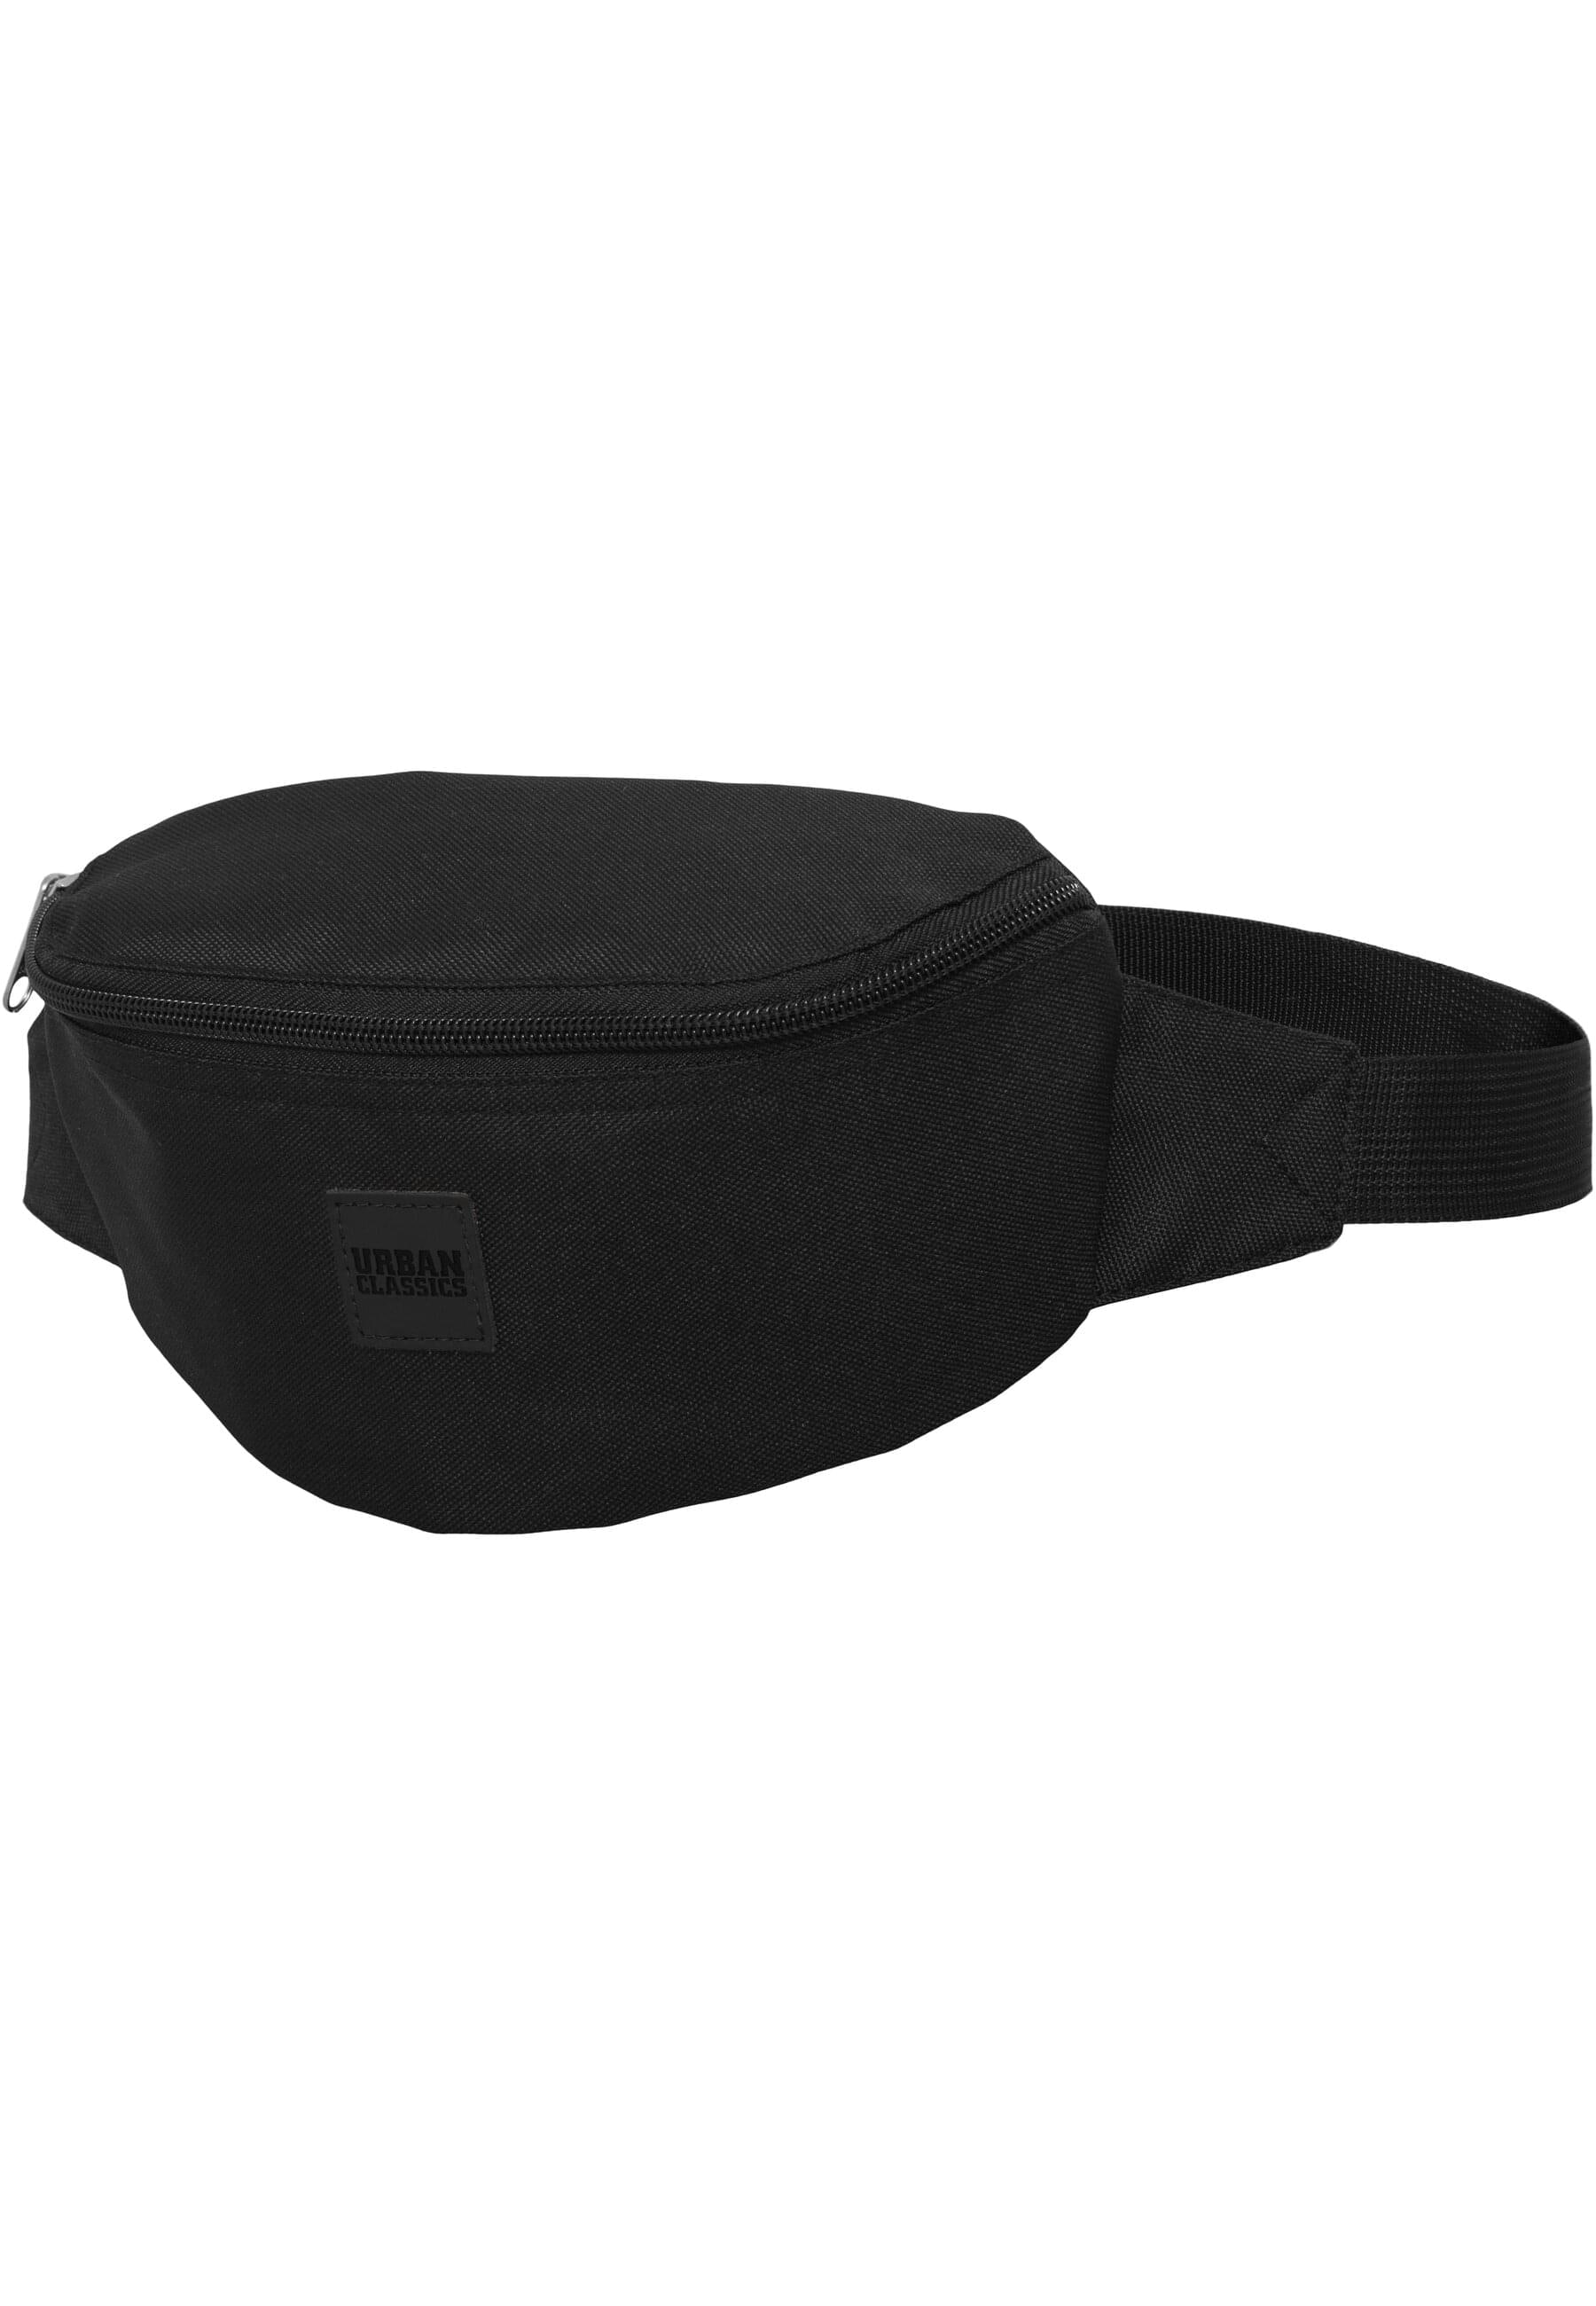 BAUR CLASSICS URBAN Bag«, (1 »Accessoires Handtasche Hip tlg.) kaufen online |